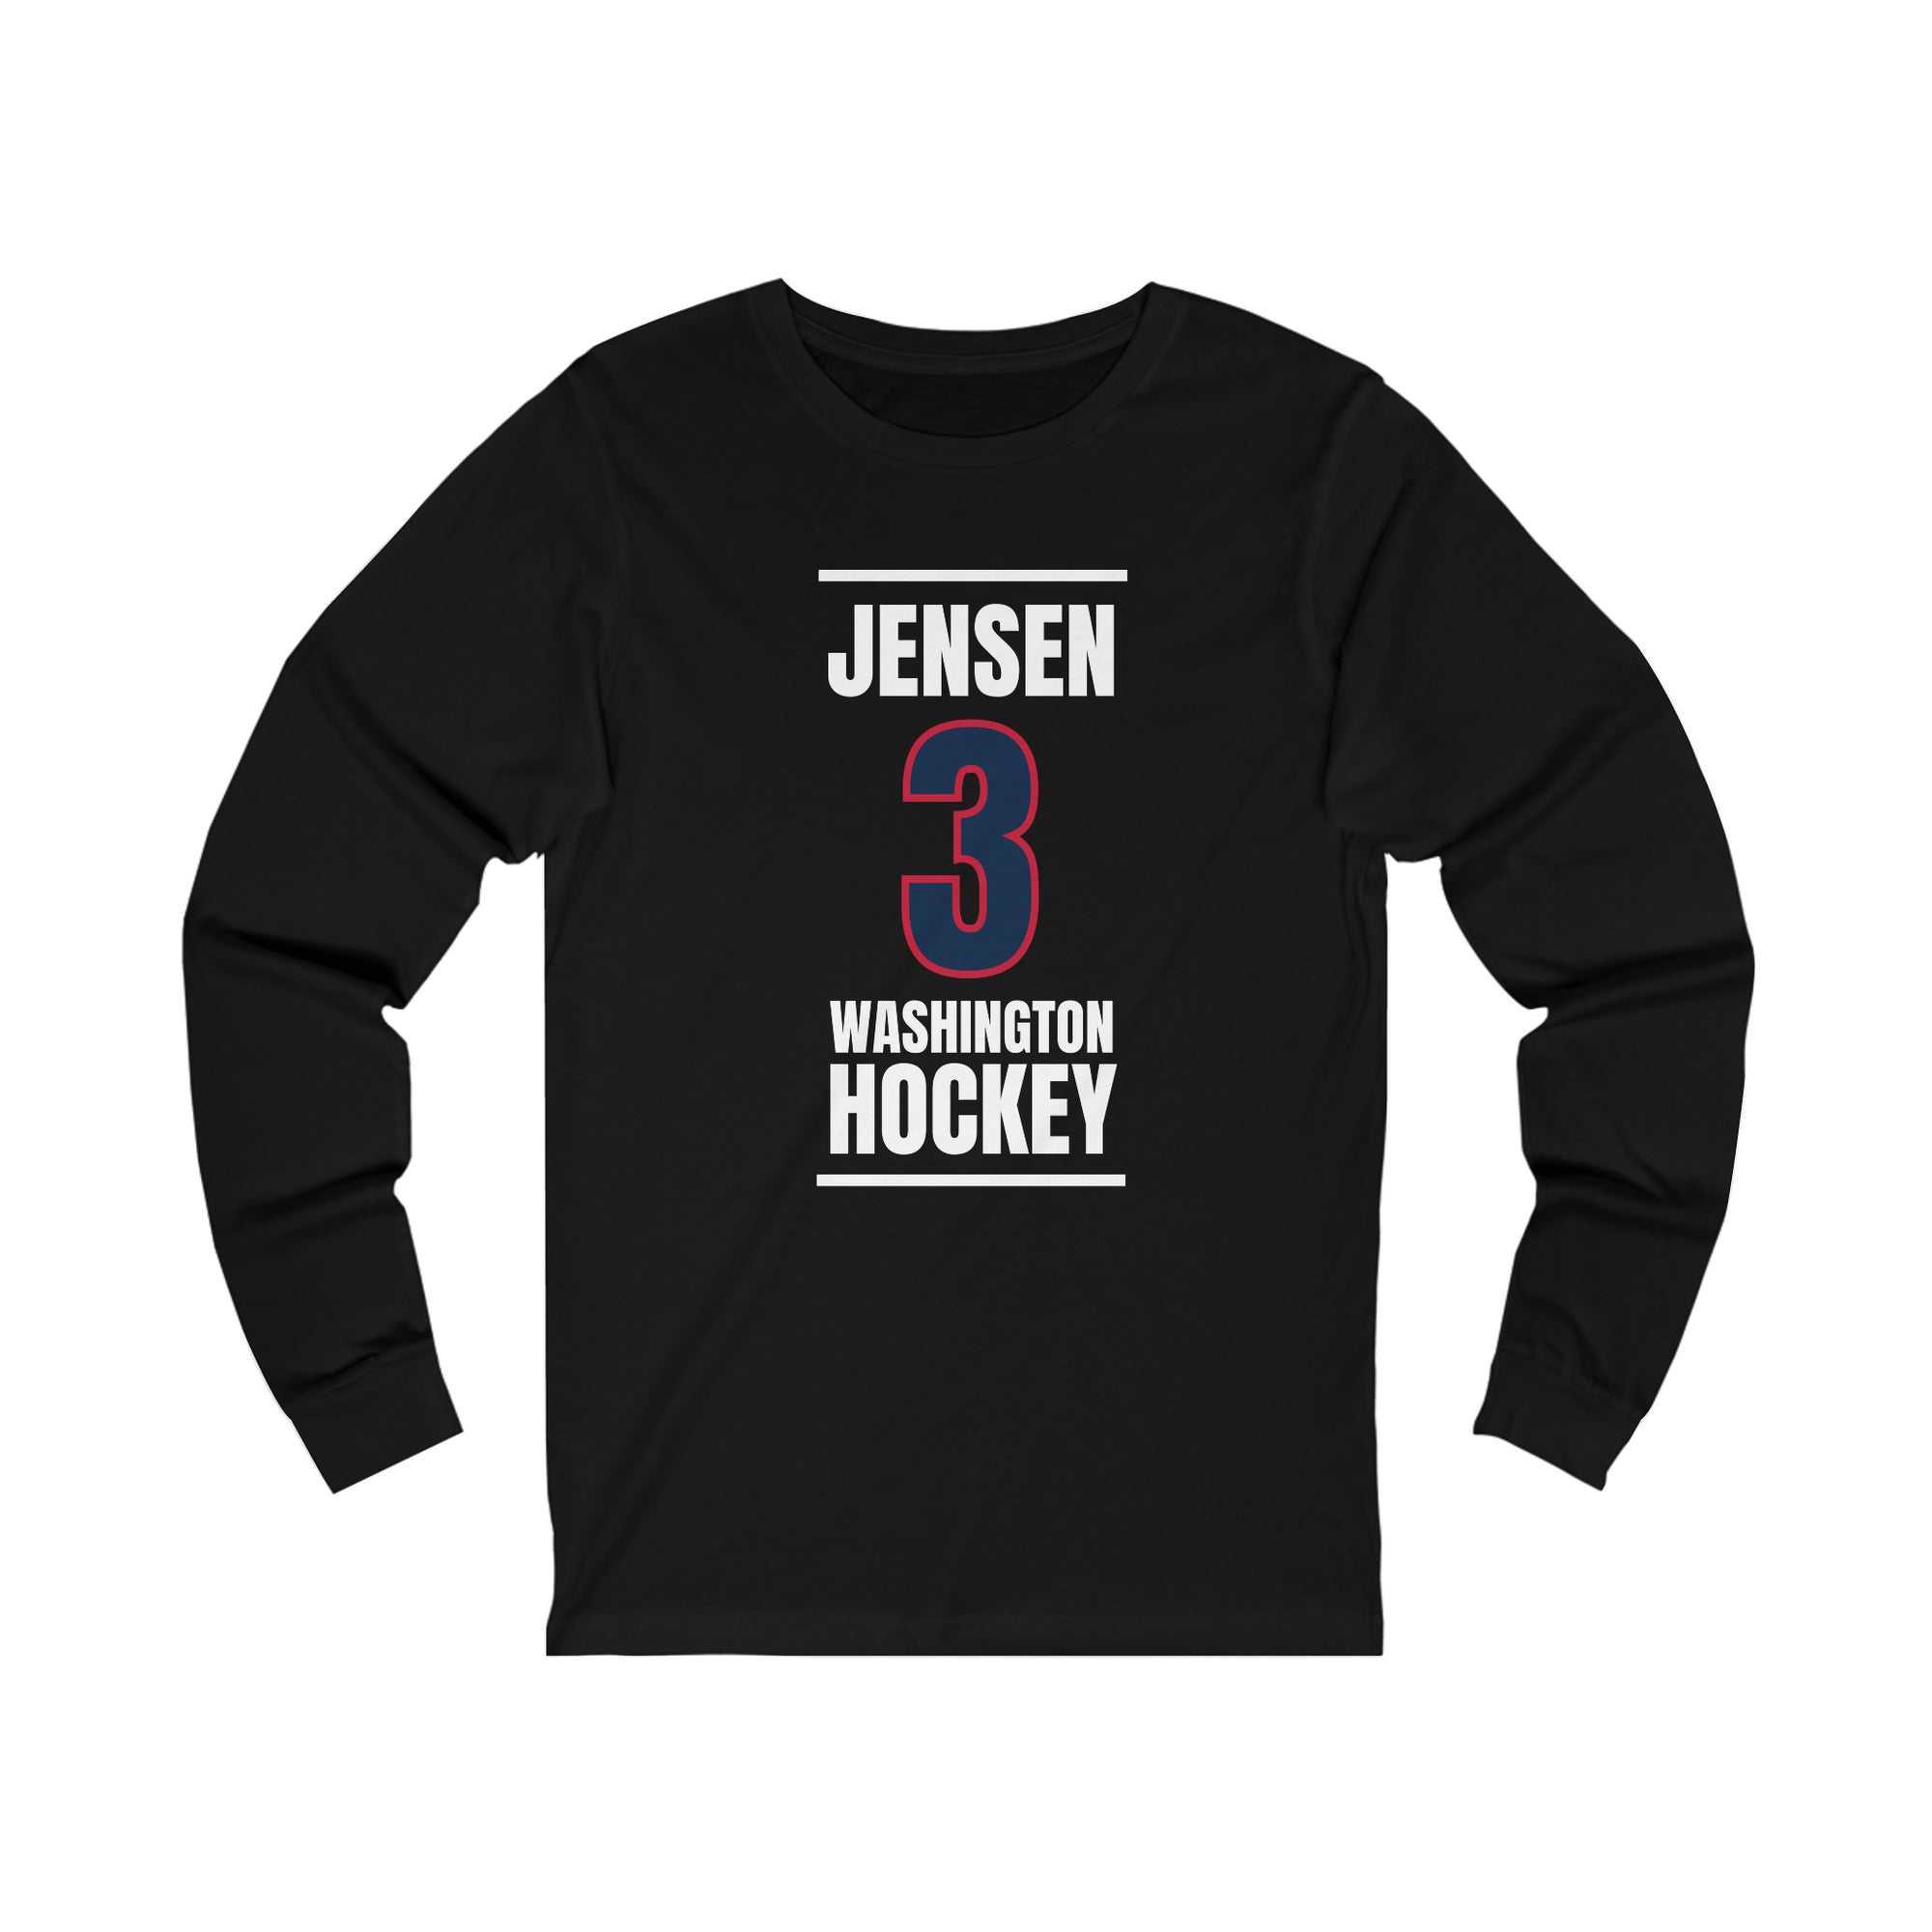 Jensen 3 Washington Hockey Navy Vertical Design Unisex Jersey Long Sleeve Shirt